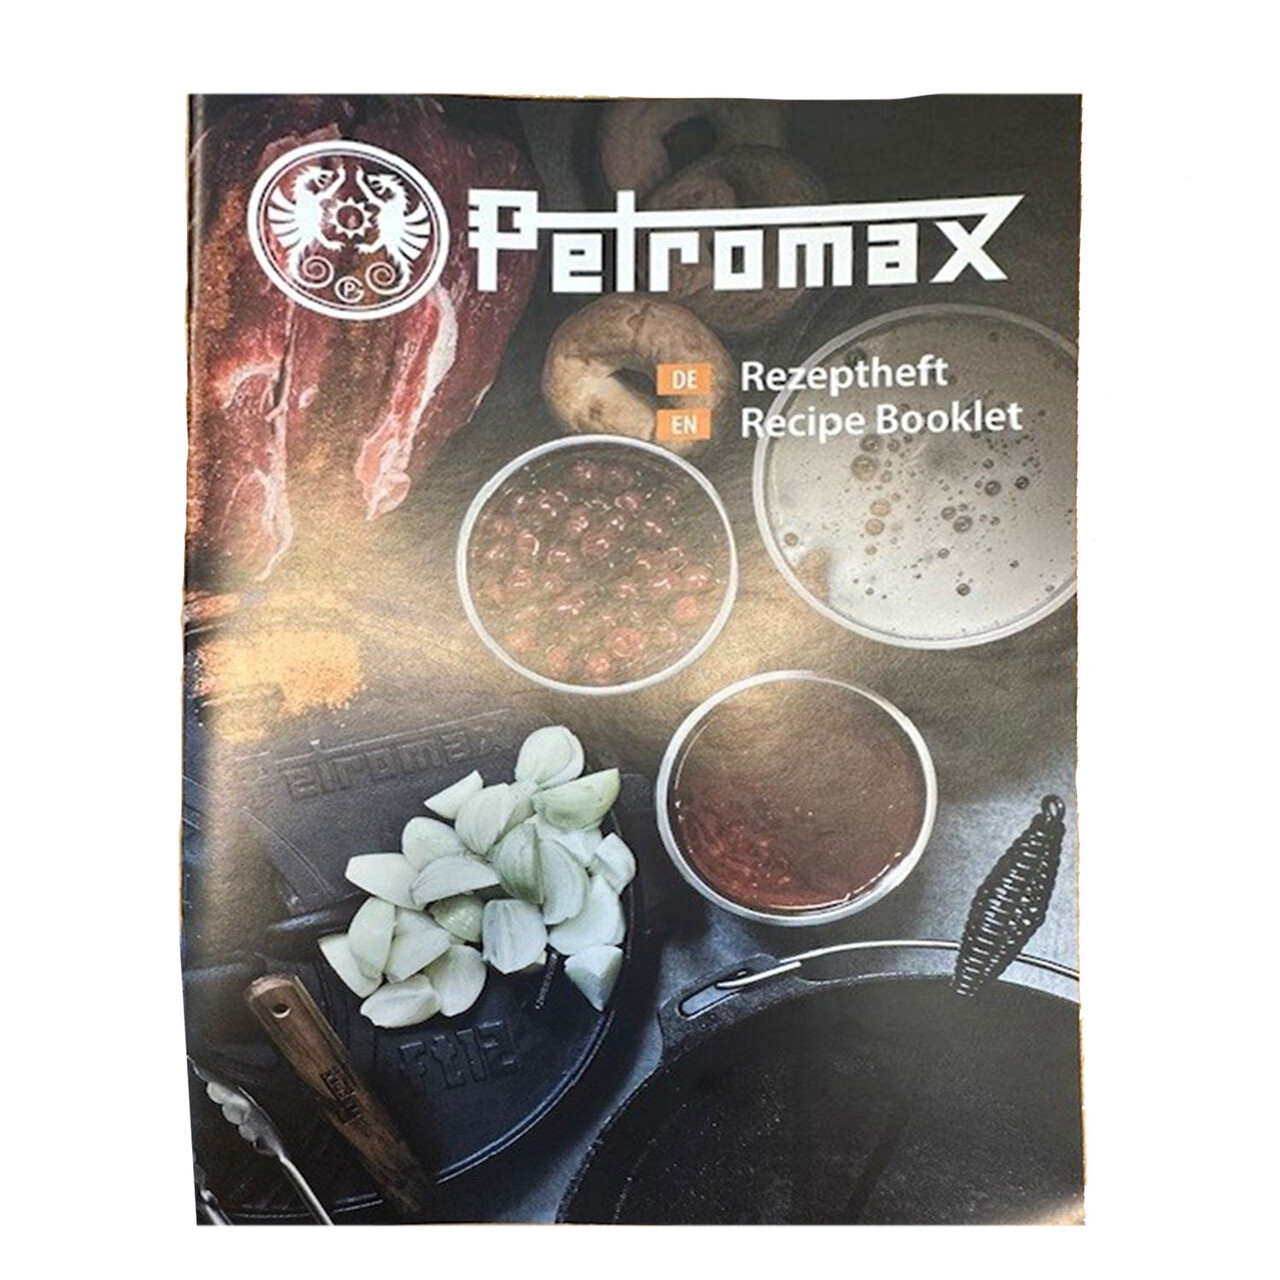 Petromax Cookbook For Dutch Ovens